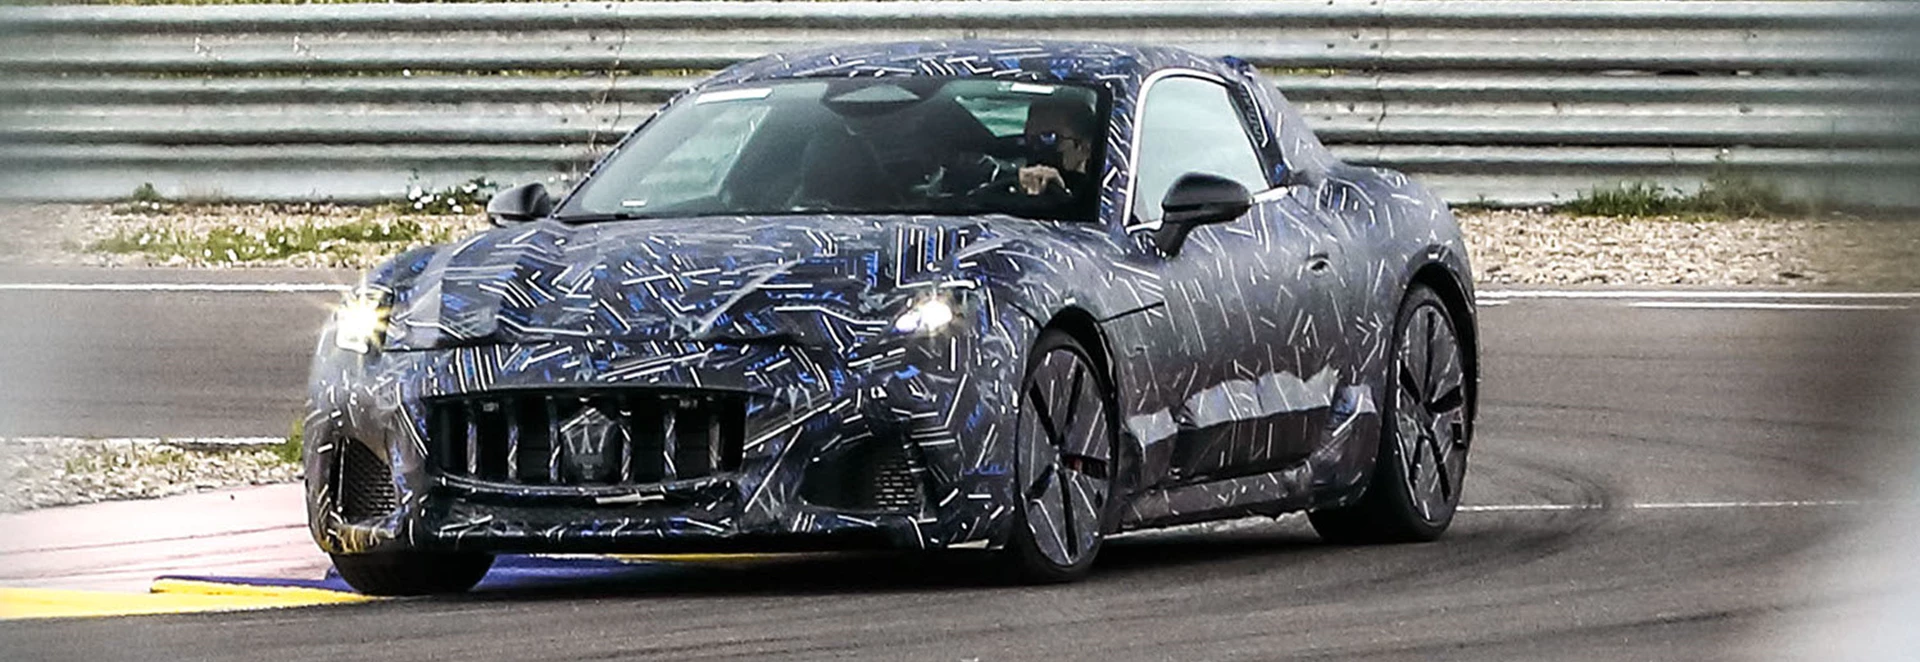 Maserati gives first glimpse of new electric GranTurismo sports car 